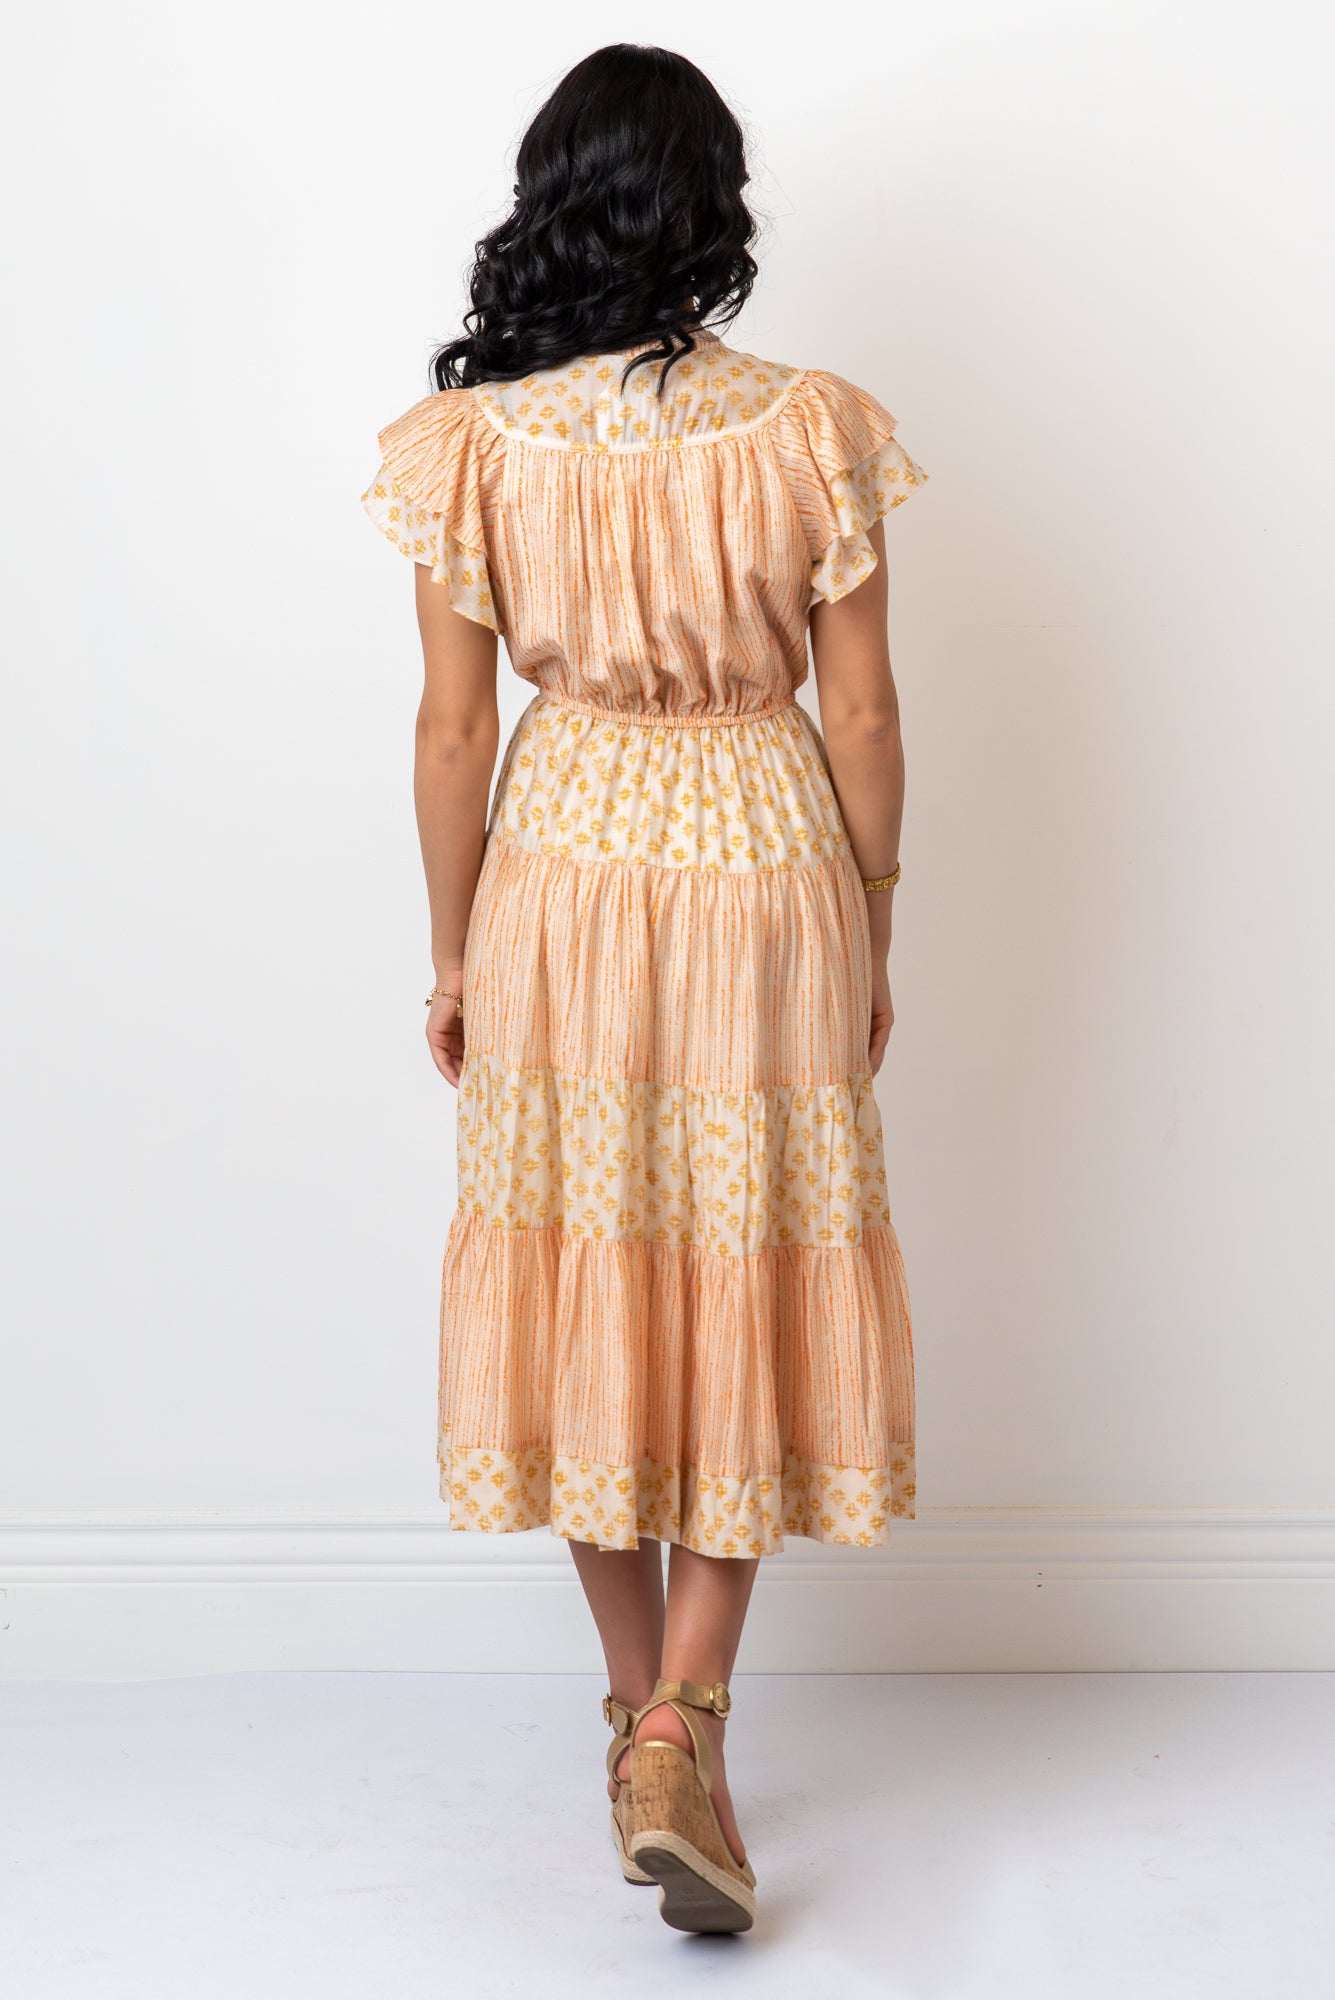 Current Air: The Eloise Dress